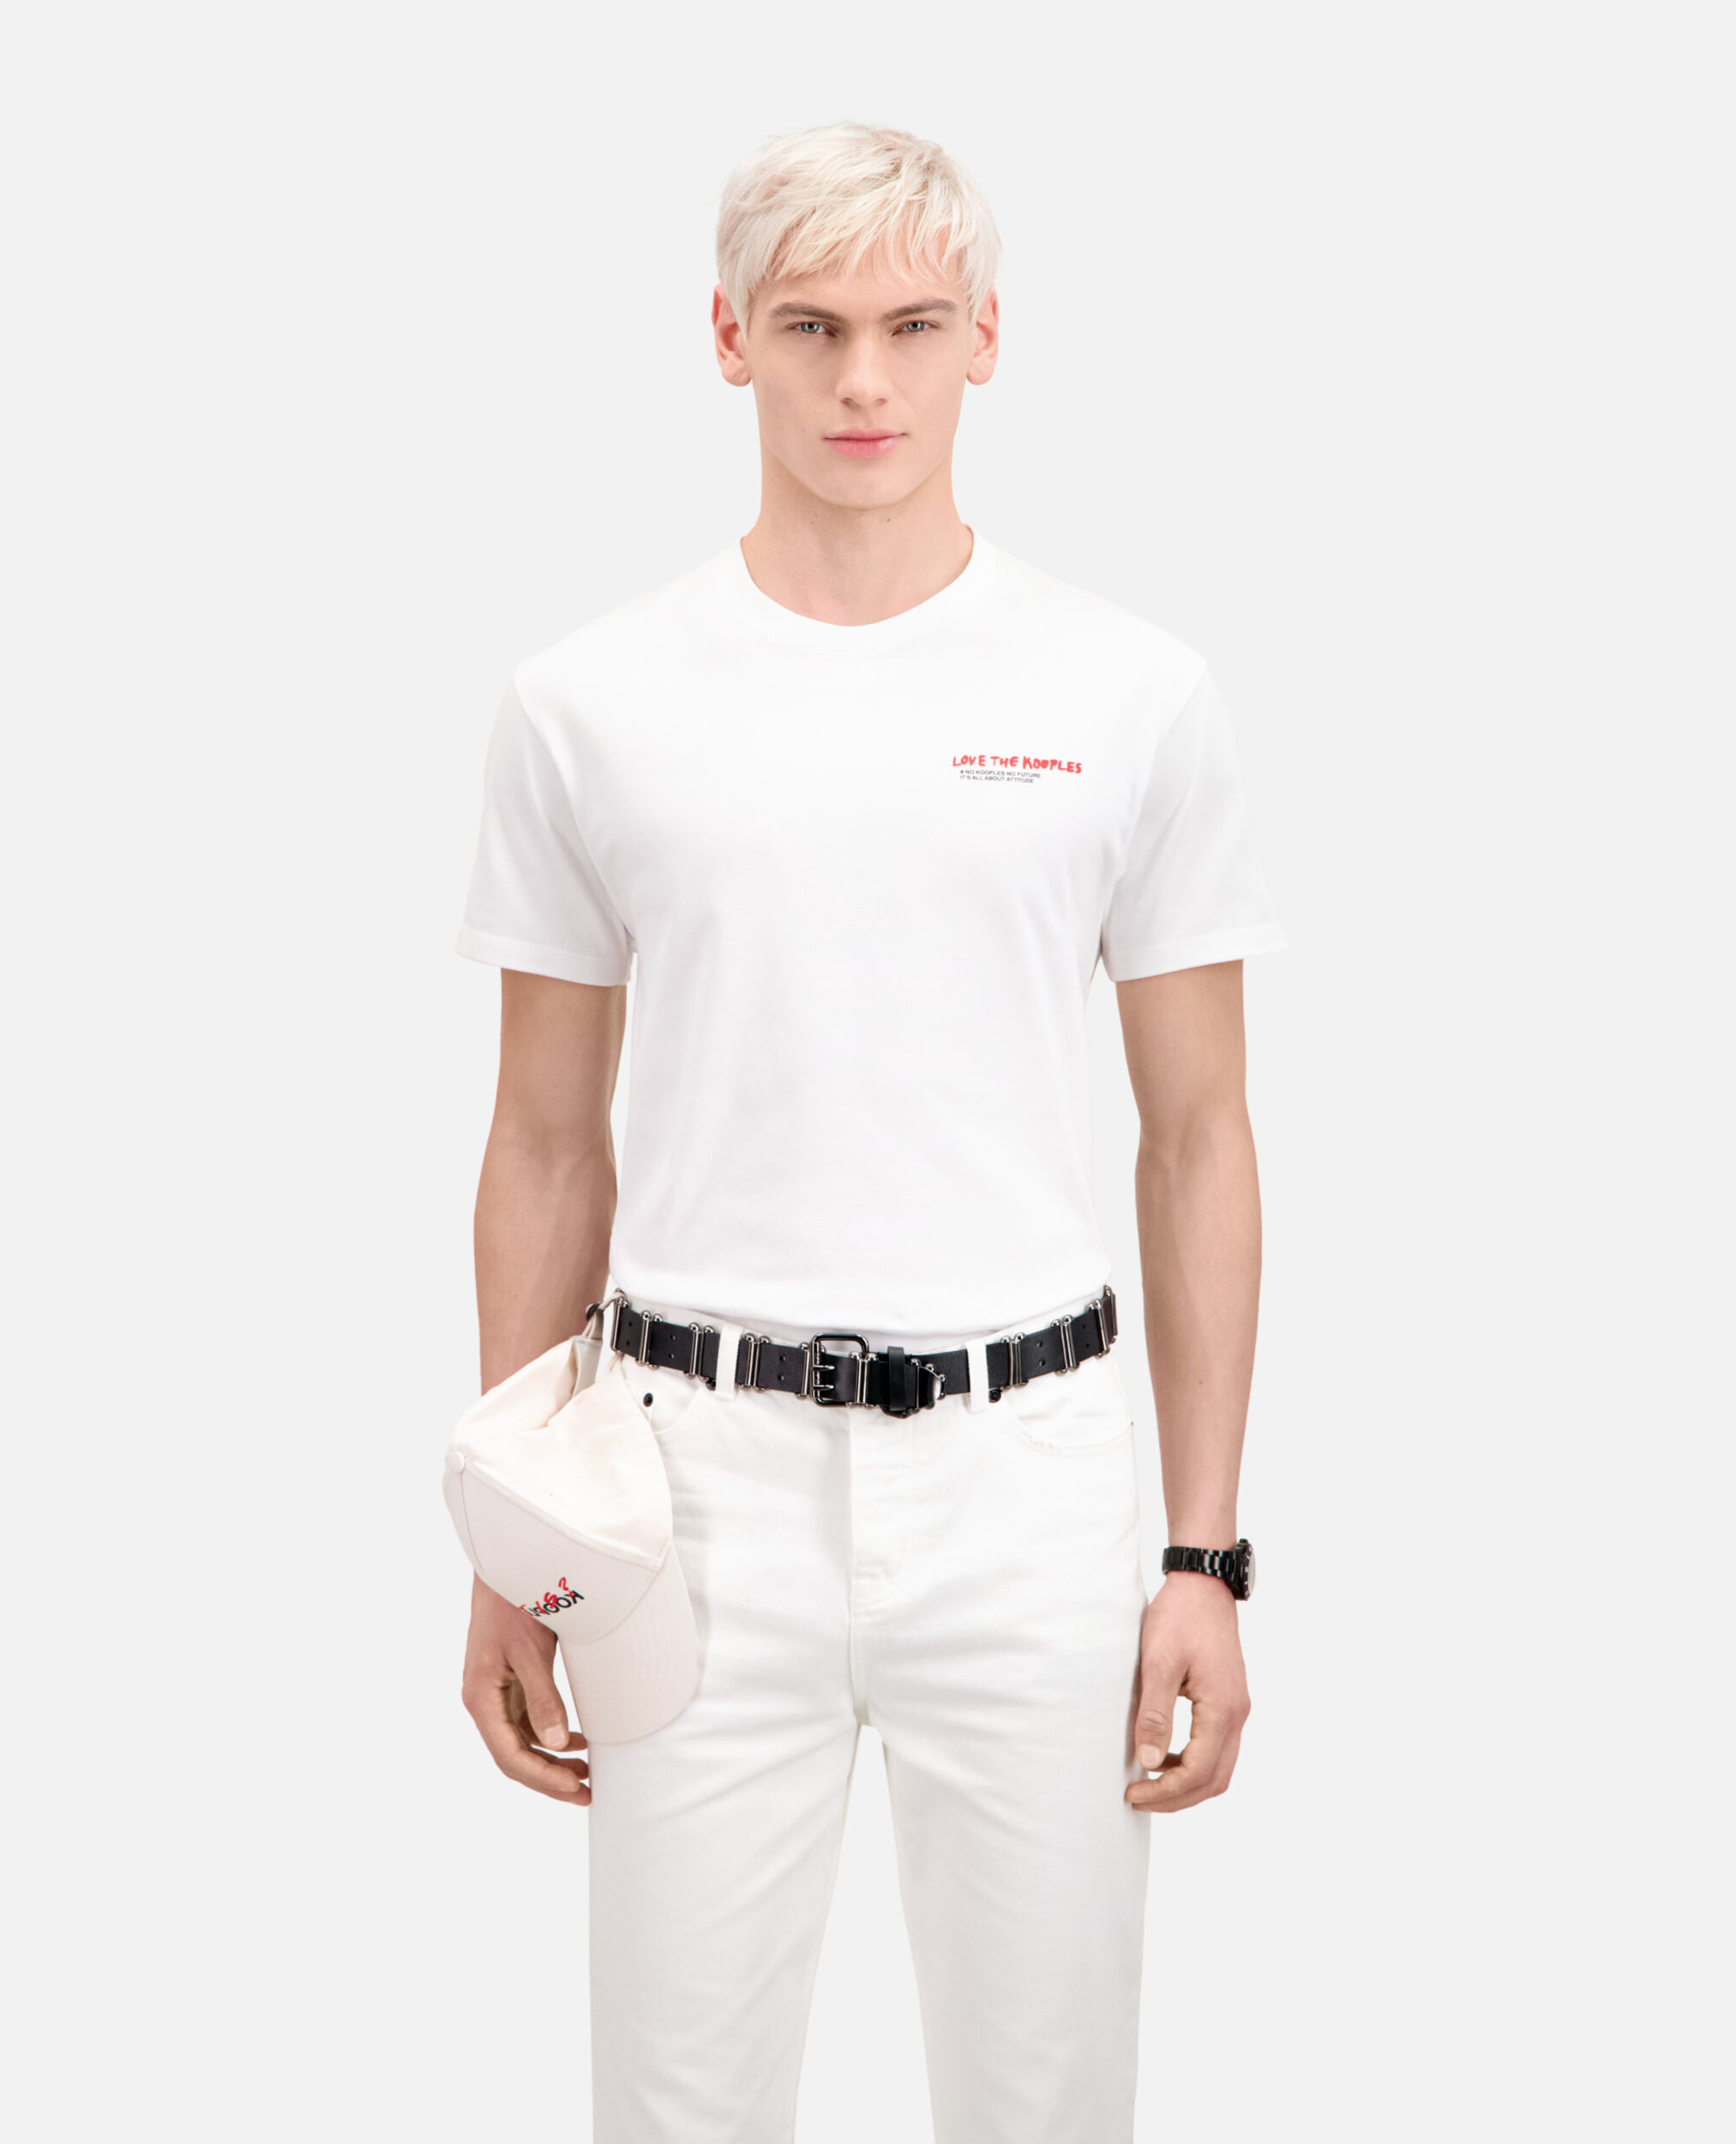 T-shirt Homme I Love Kooples blanc, WHITE, hi-res image number null